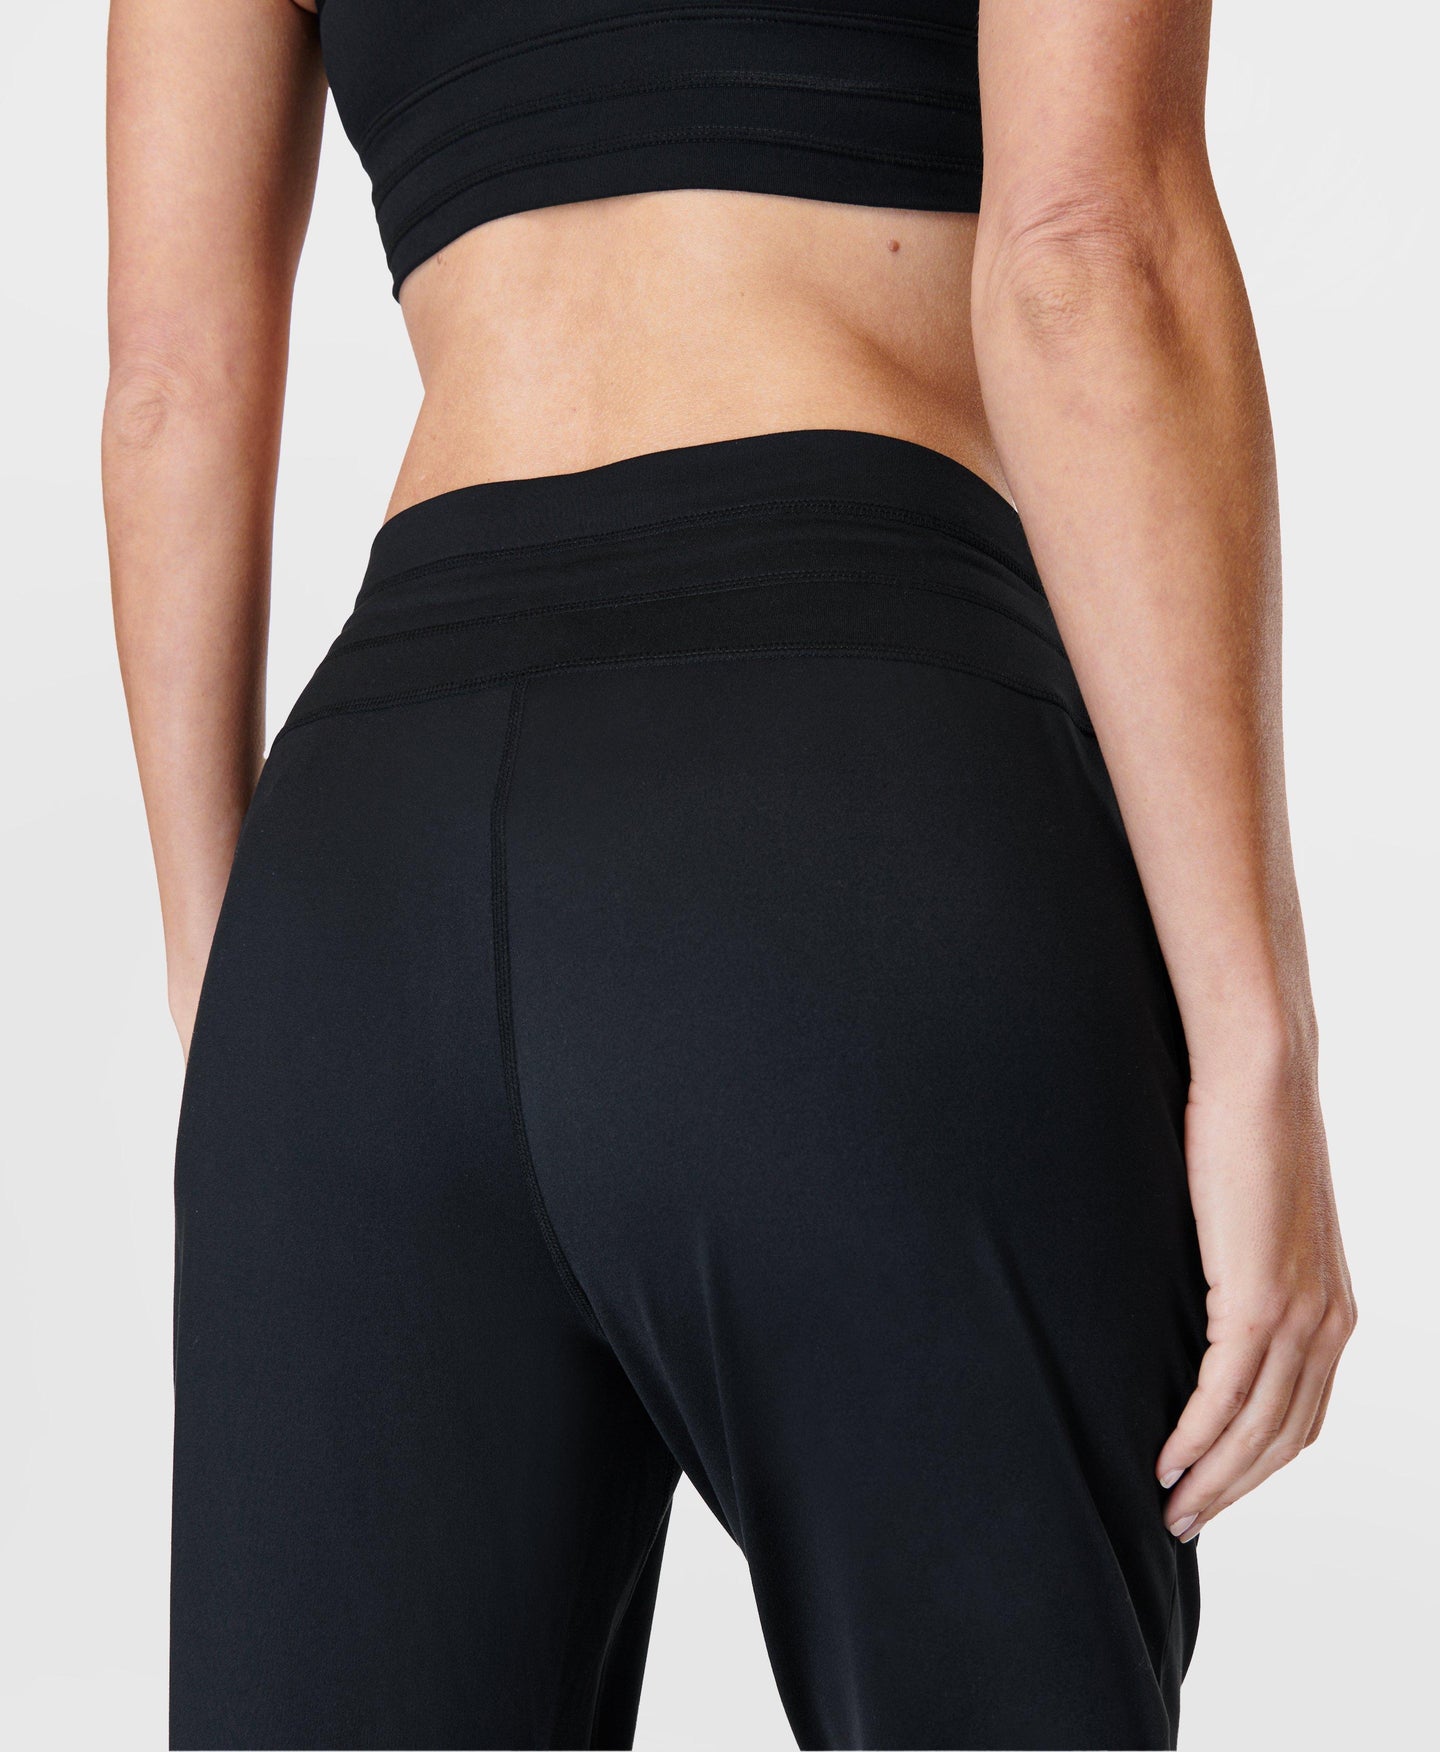 Gaia Yoga Pants Sb9555s Black